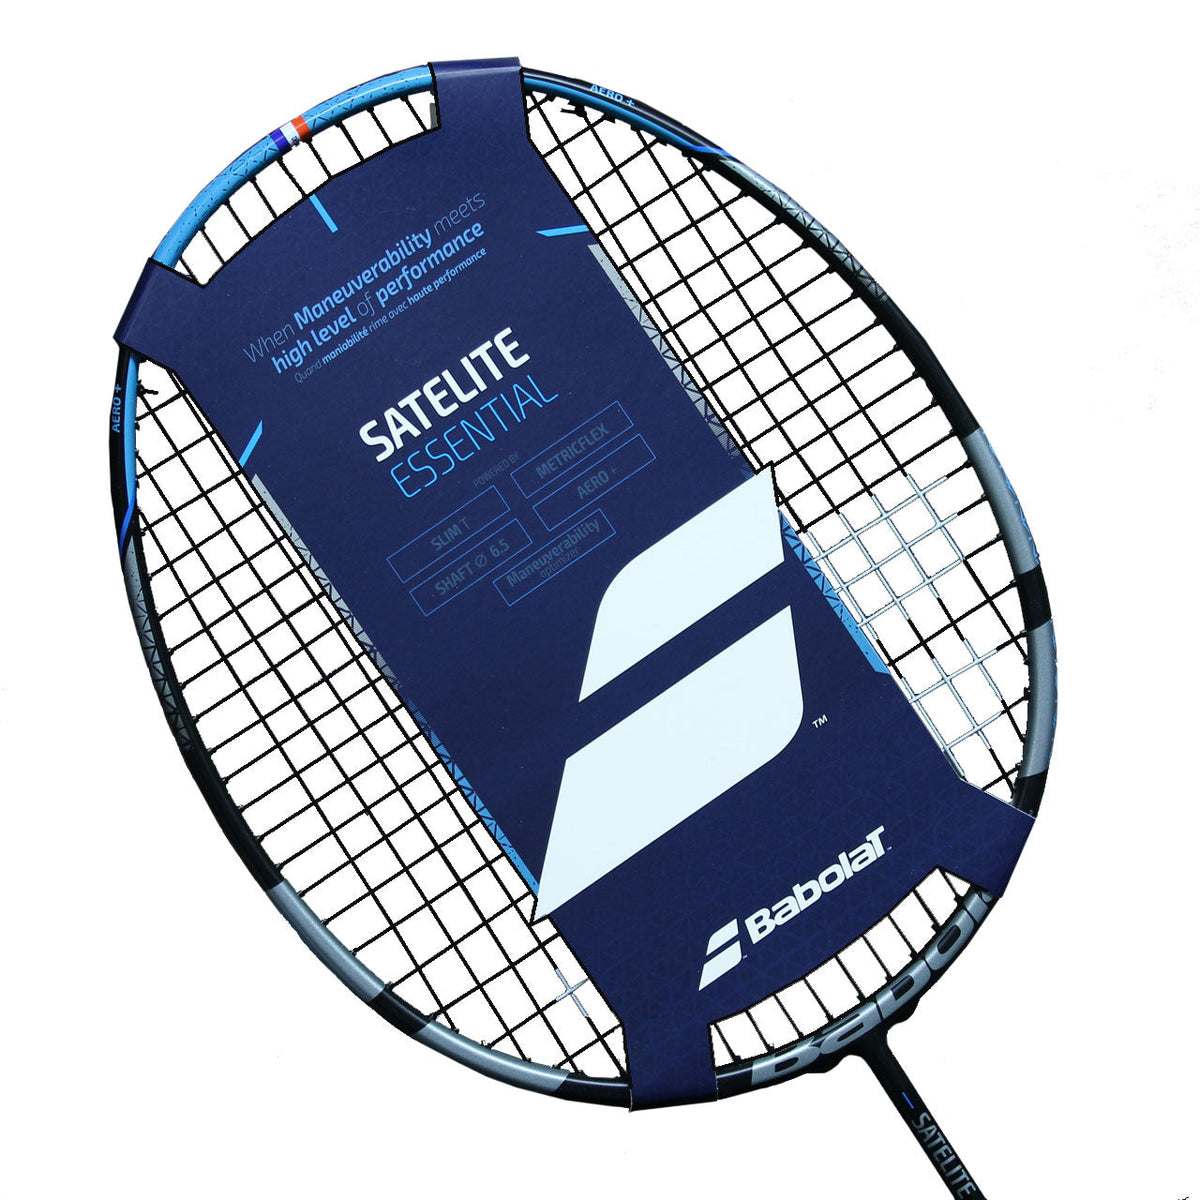 DEMO Racket - Babolat Satelite Essential